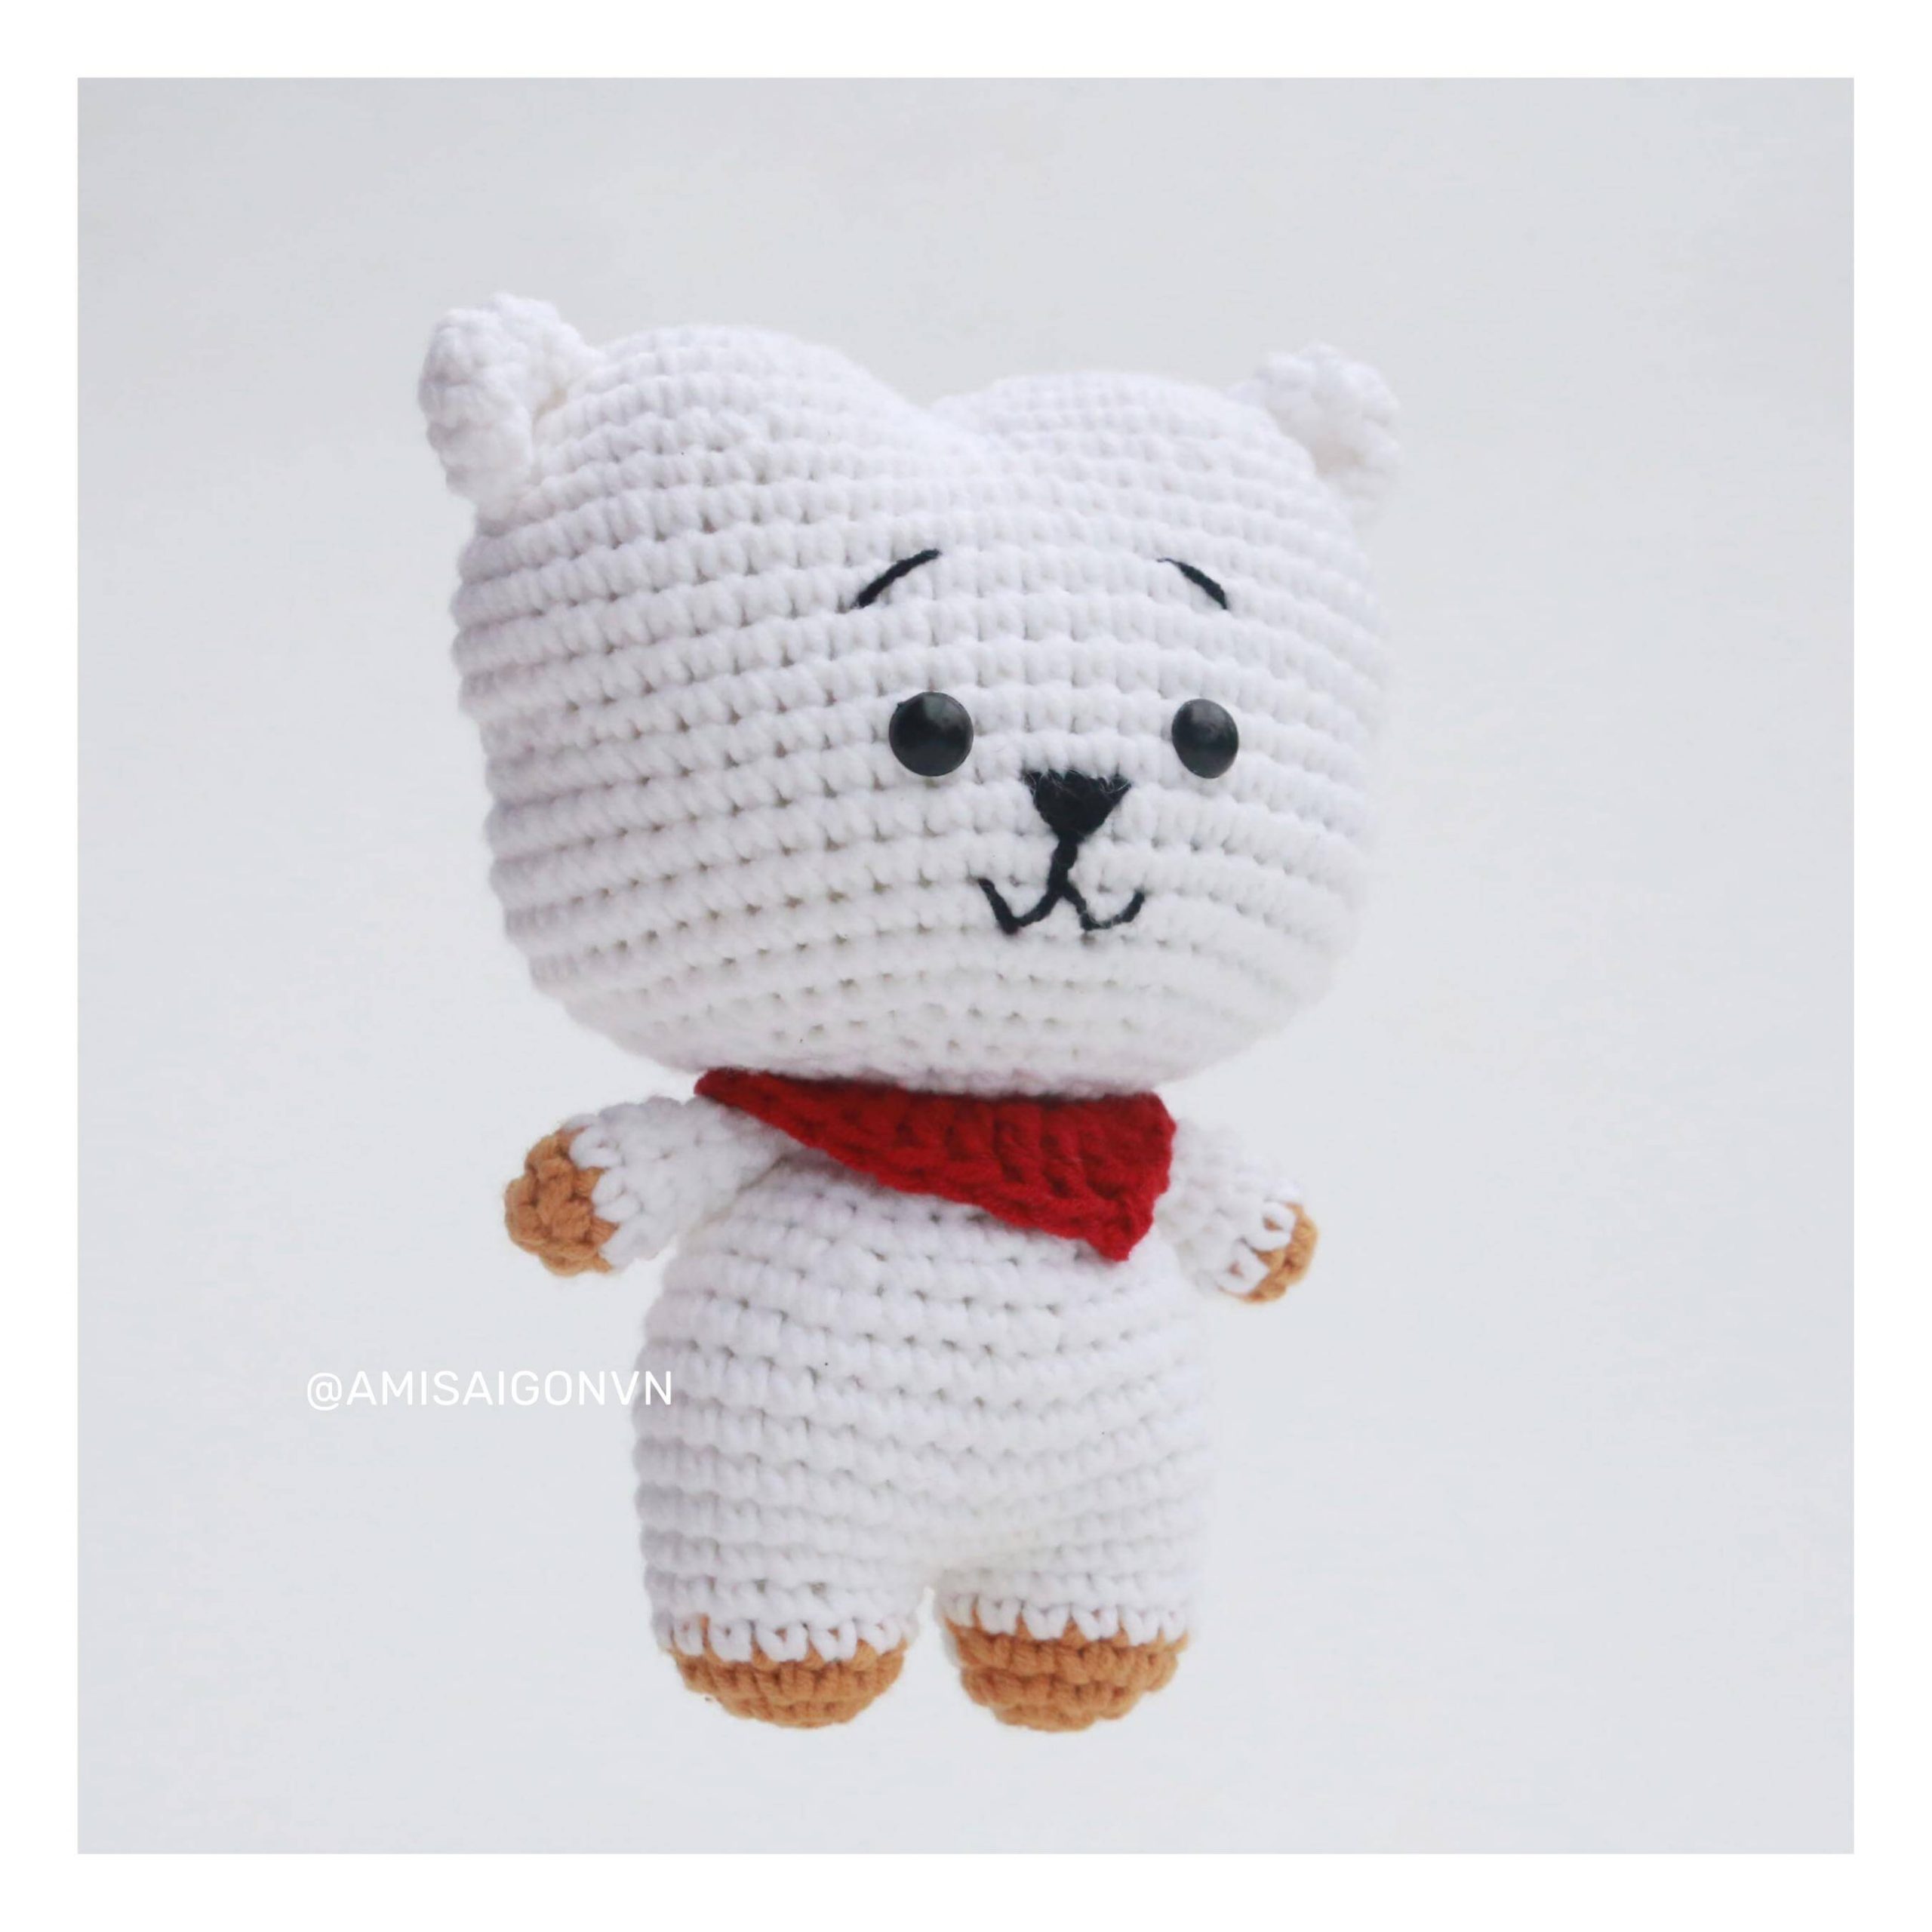 RJ-sheep-amigurumi-crochet-pattern-amisaigon-bts-bt21 (8)